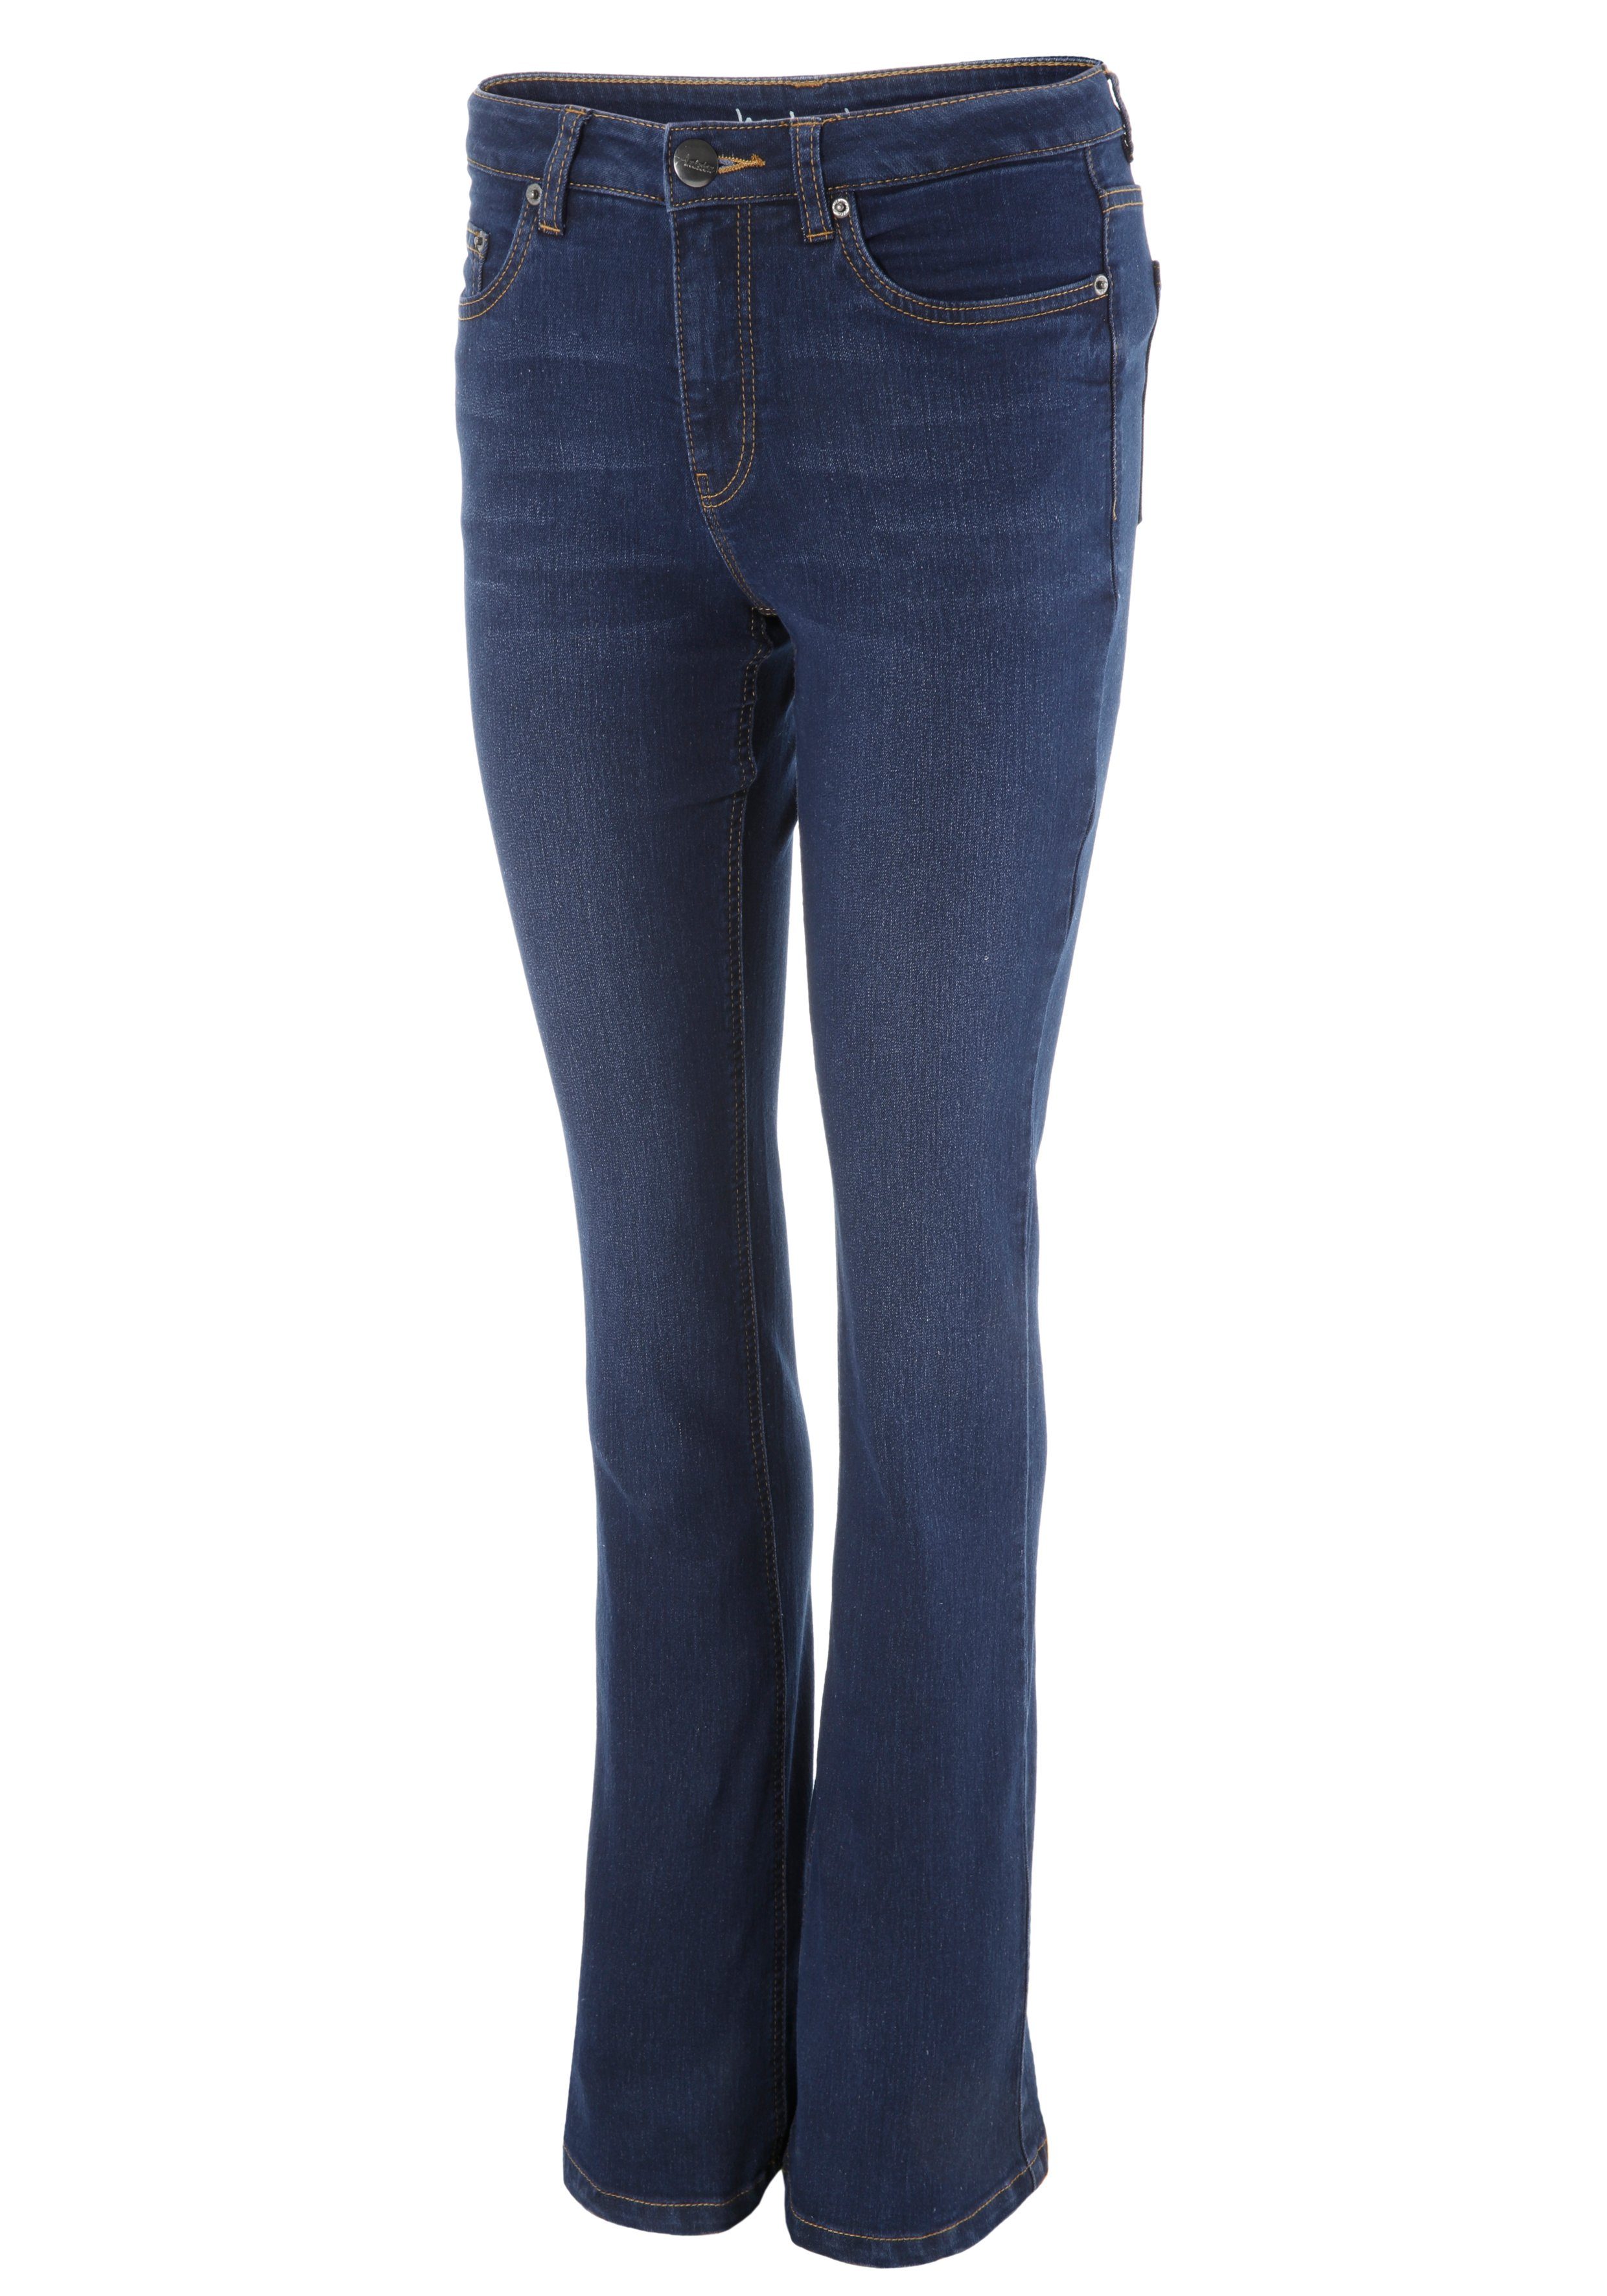 Aniston CASUAL Bootcut-Jeans regular waist